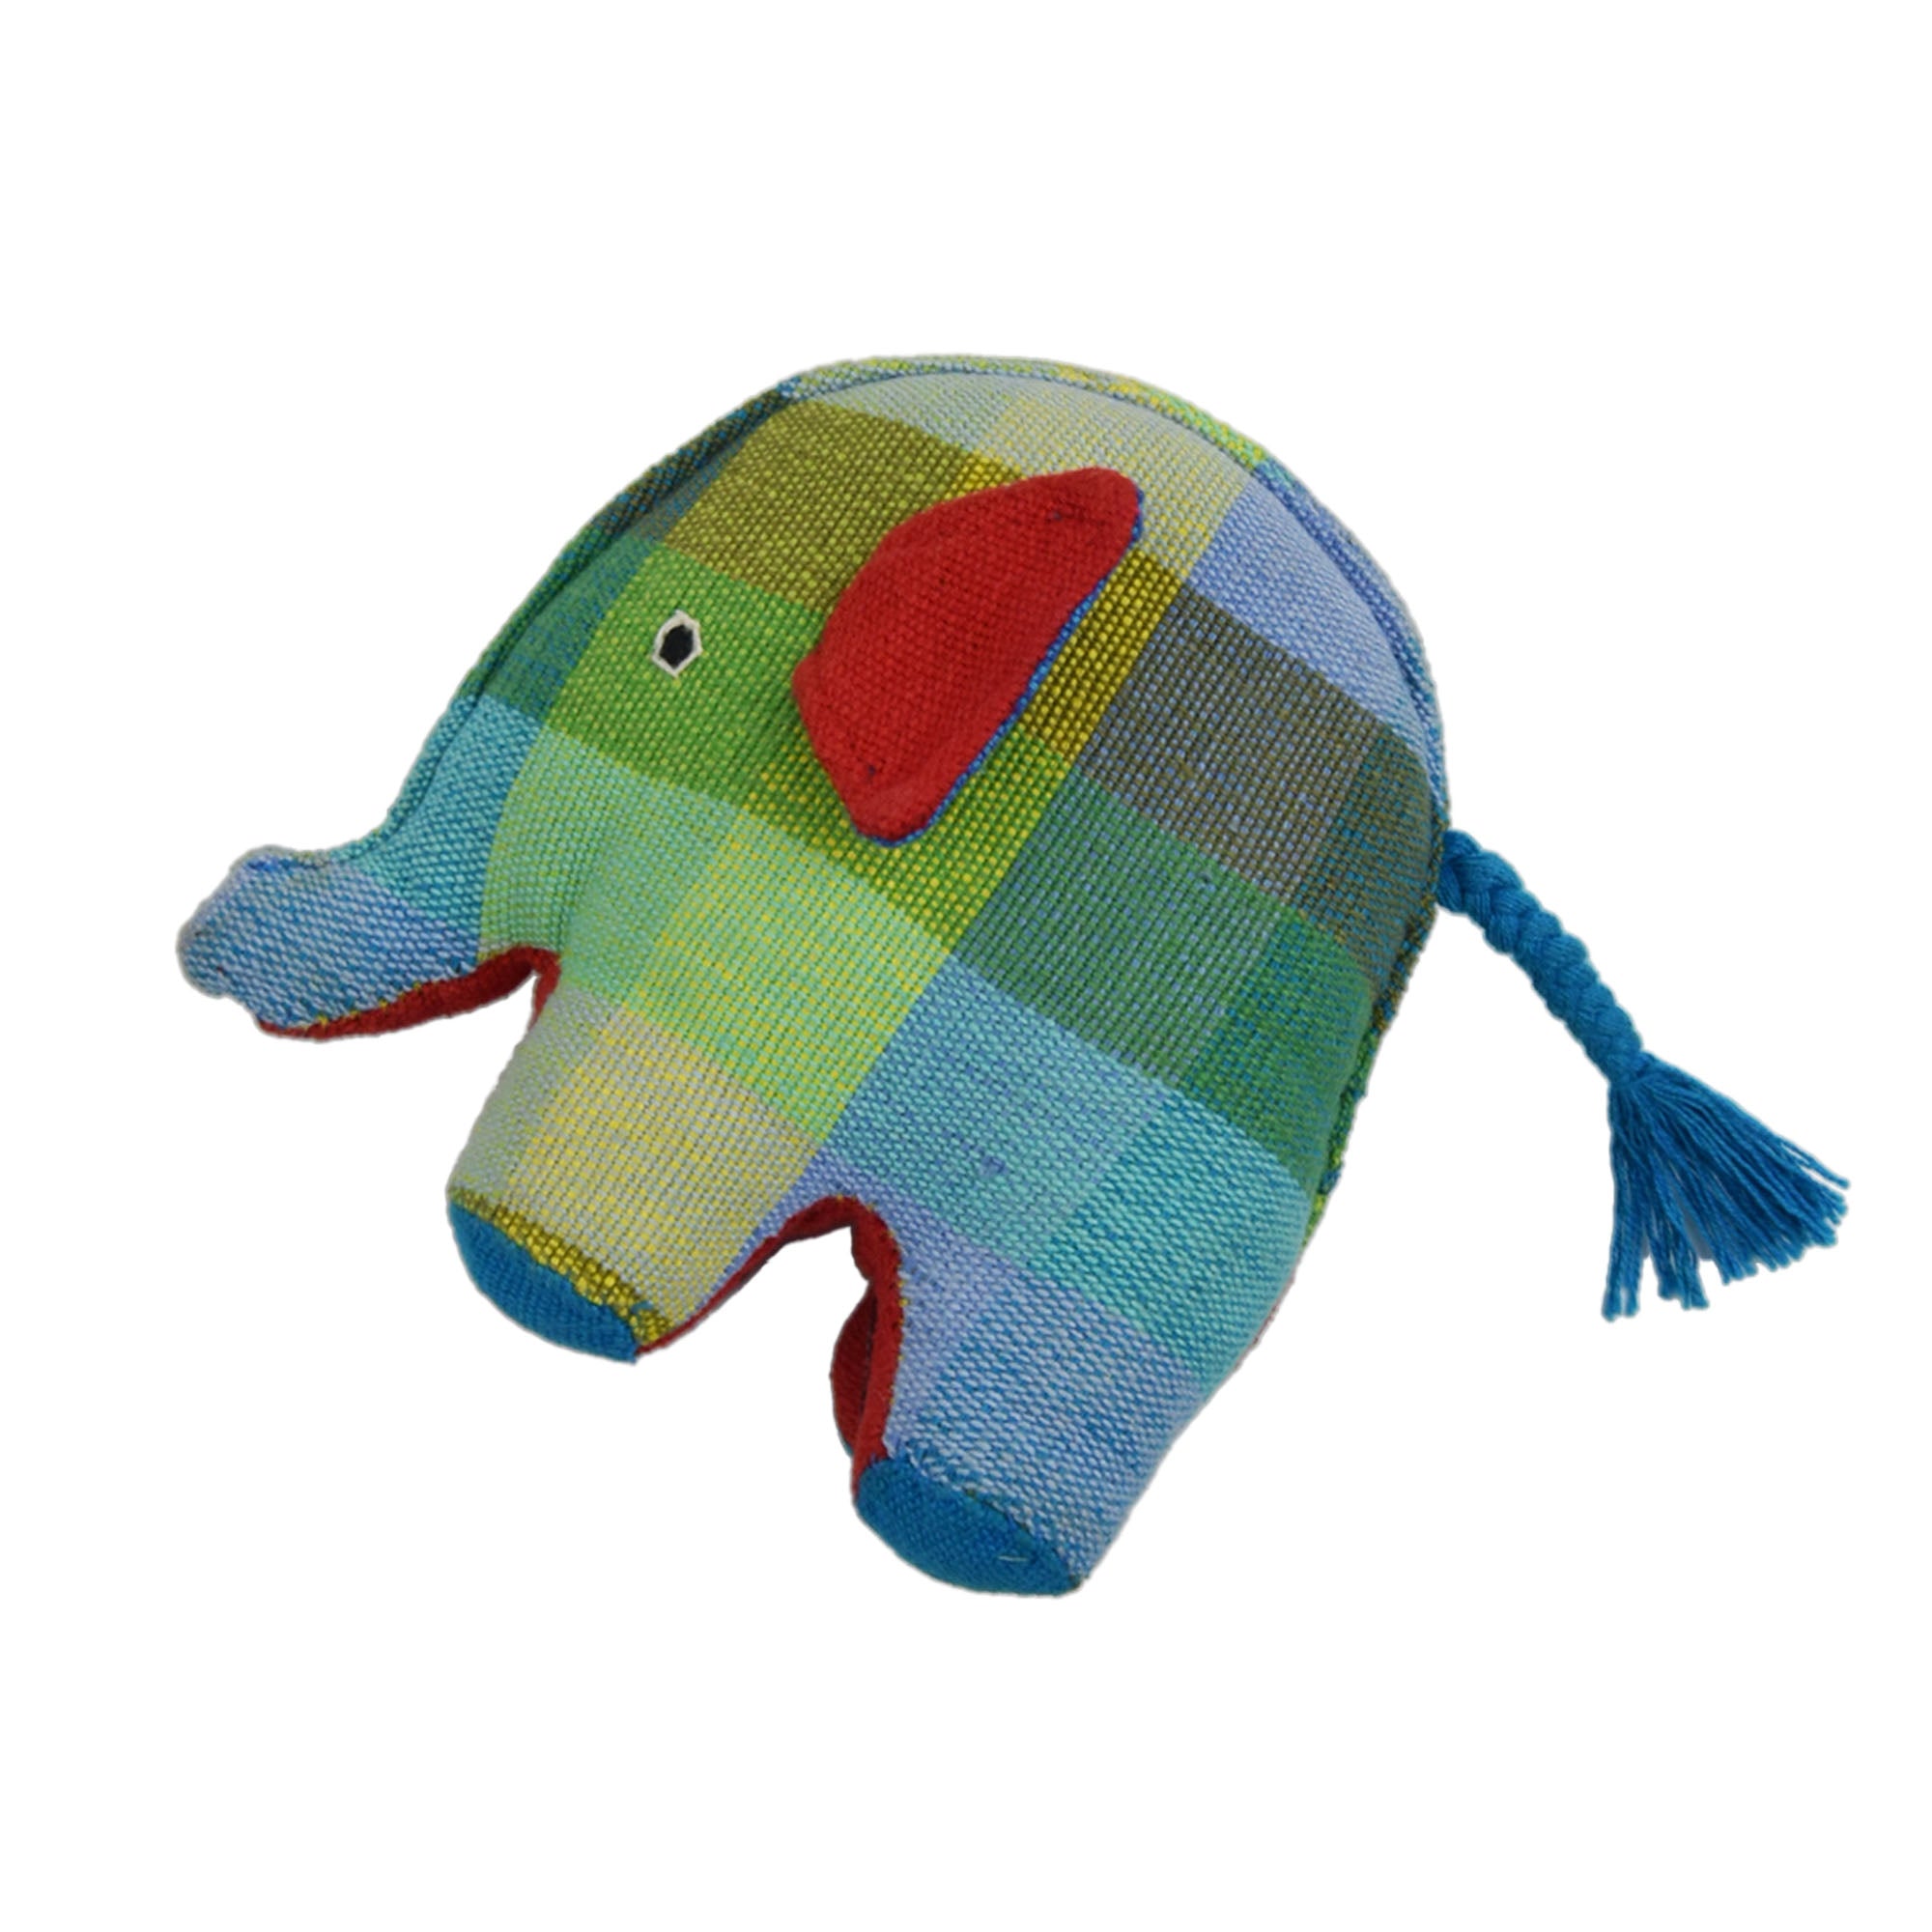 Handmade Animal Elephant Stuffed Toy For Kids